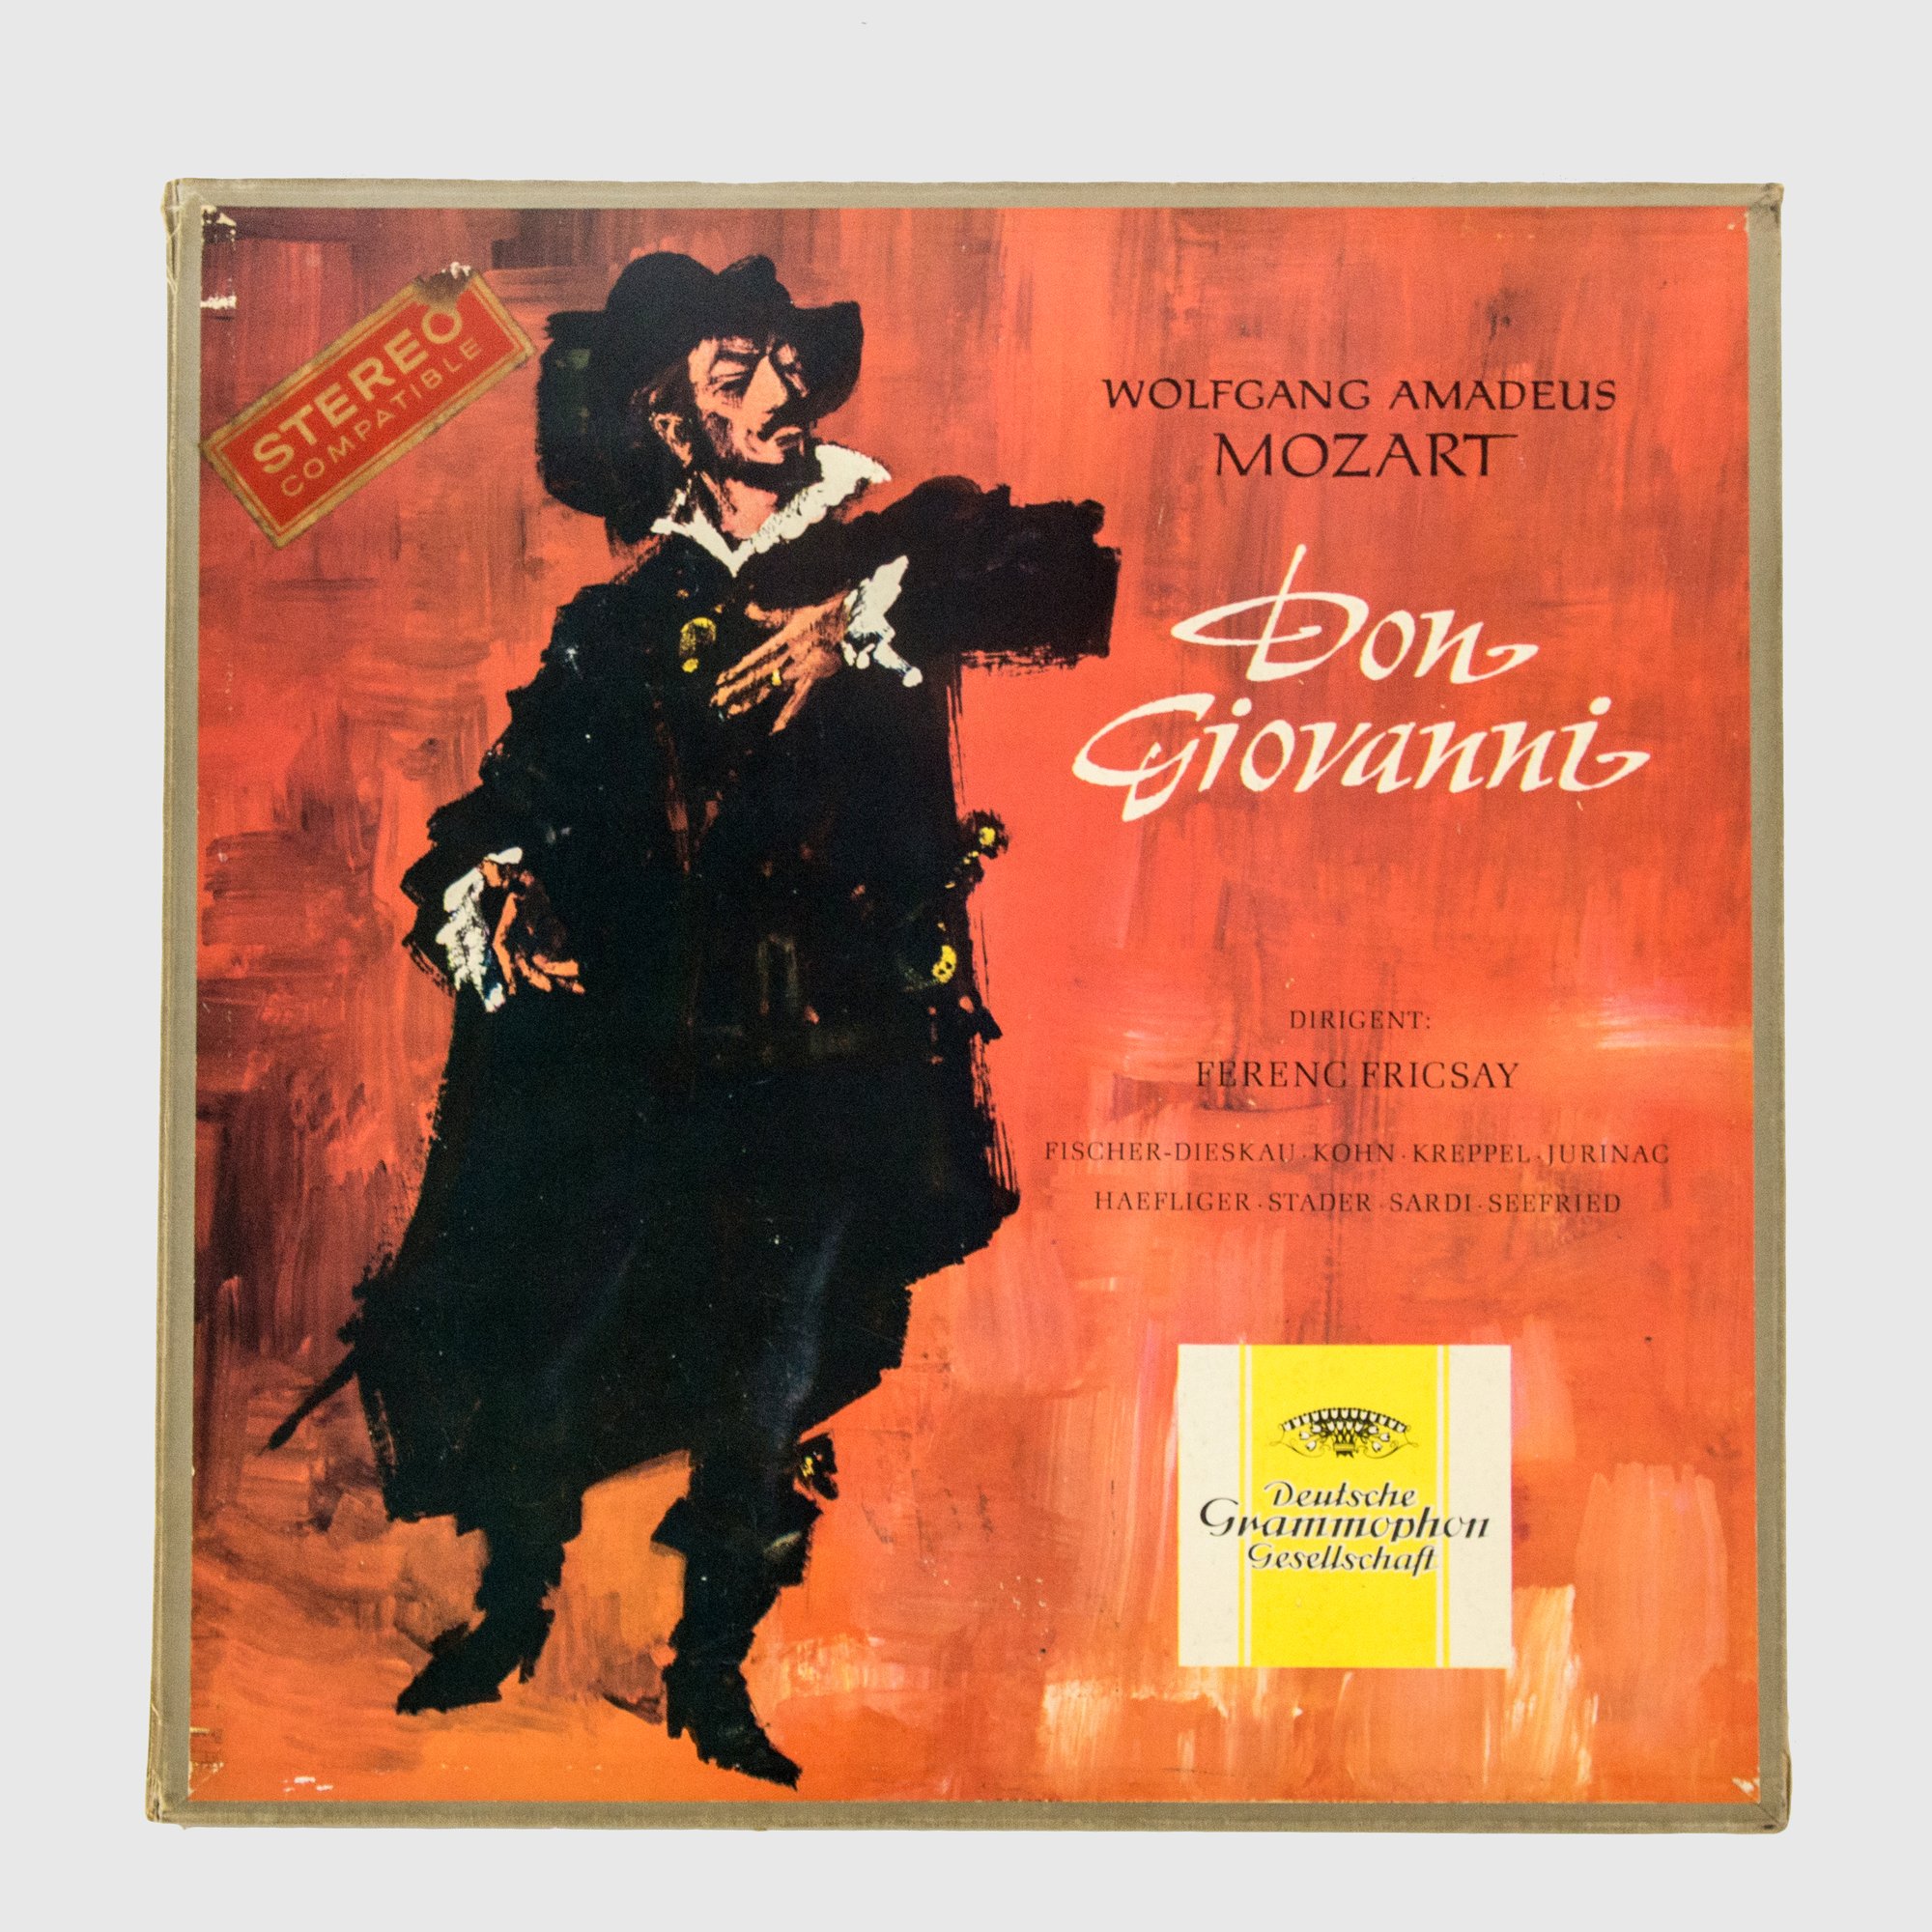 Colectie 3 viniluri Don Giovanni de Wolfgang Amadeus Mozart 1959 Viniluri